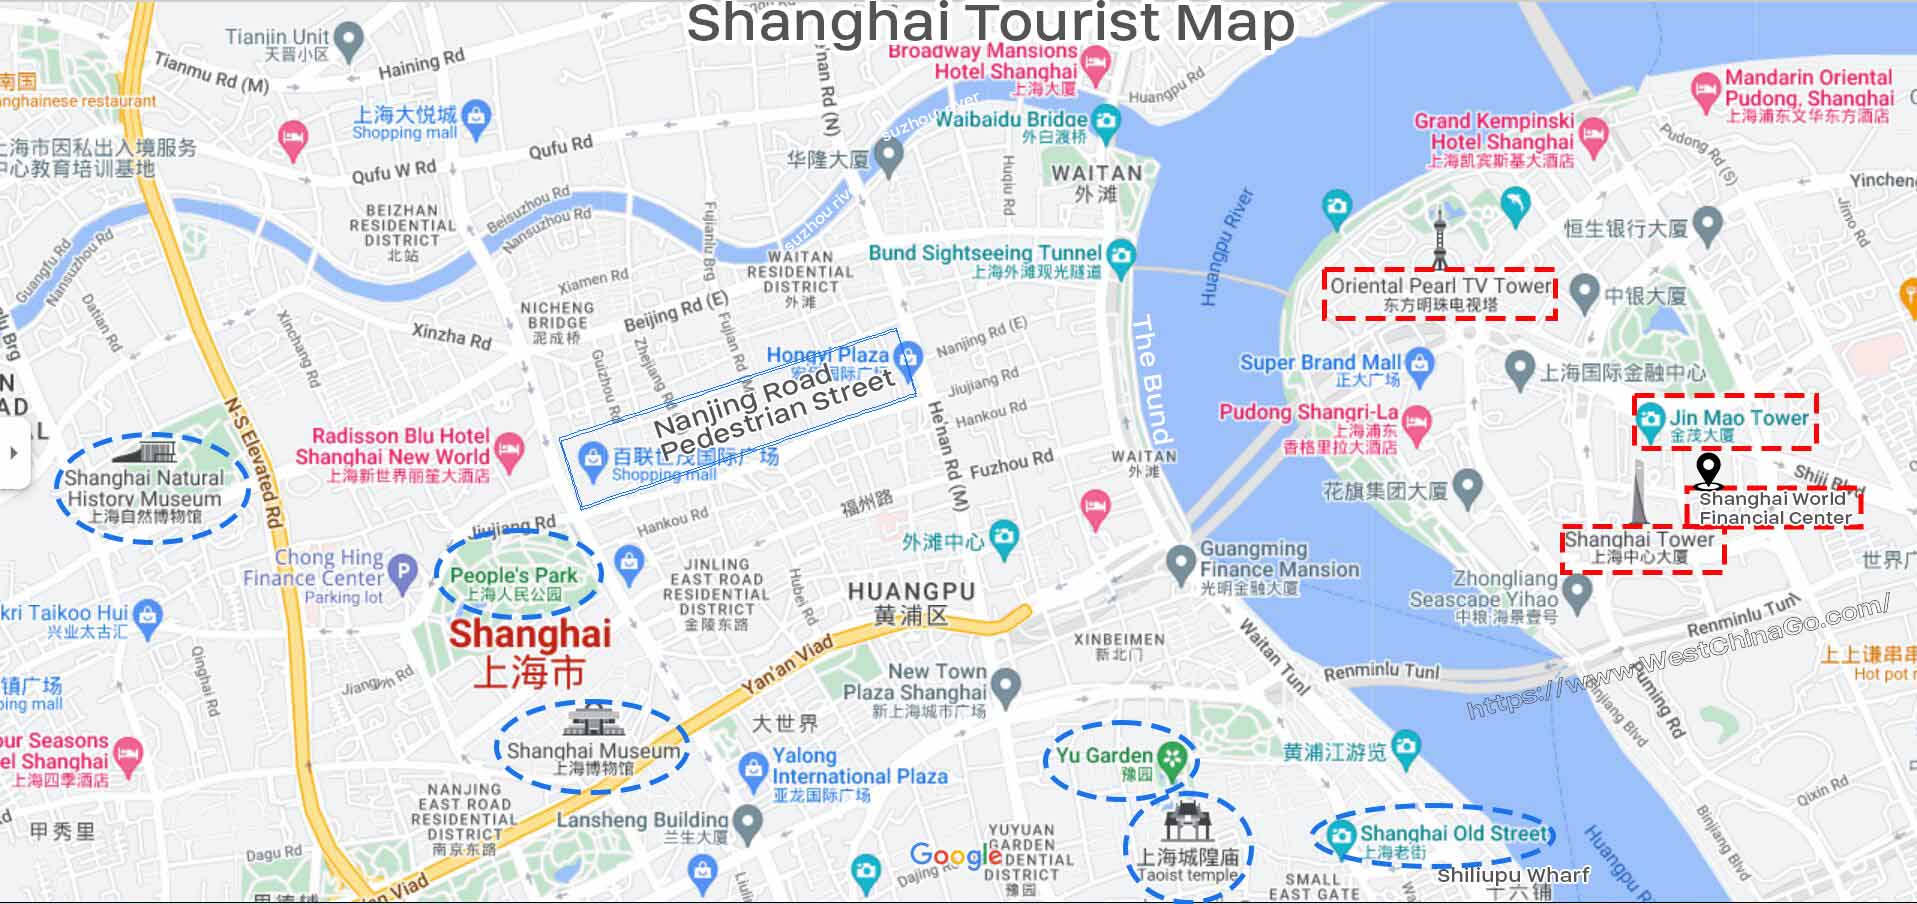 ShangHai Tourist Map